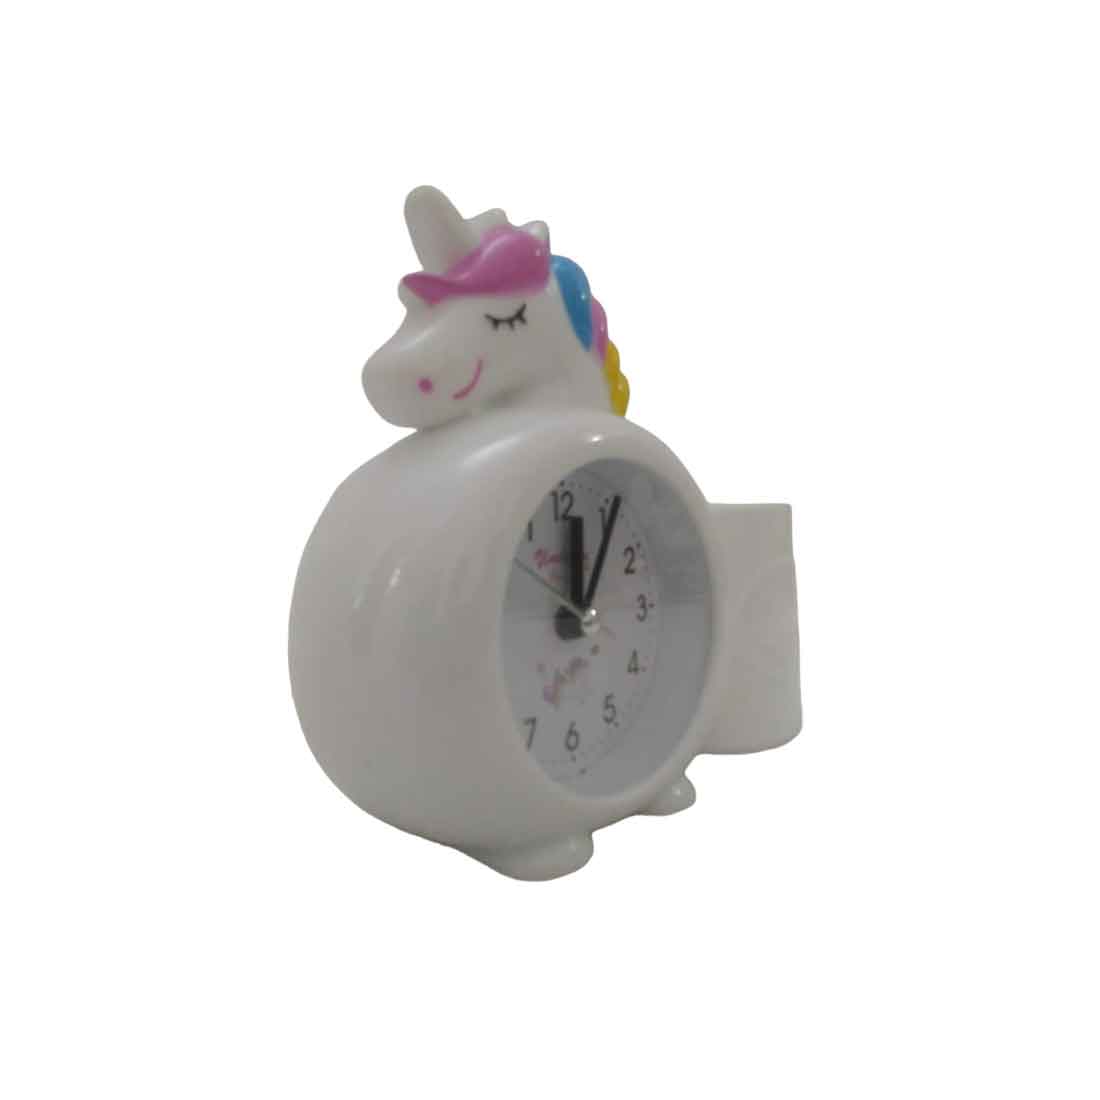 Kids Alarm Clock with Pen Pencil Stand | Unicorn Design Table Alarm Clock - For Kids Room Decor & Birthday Gift - Apkamart